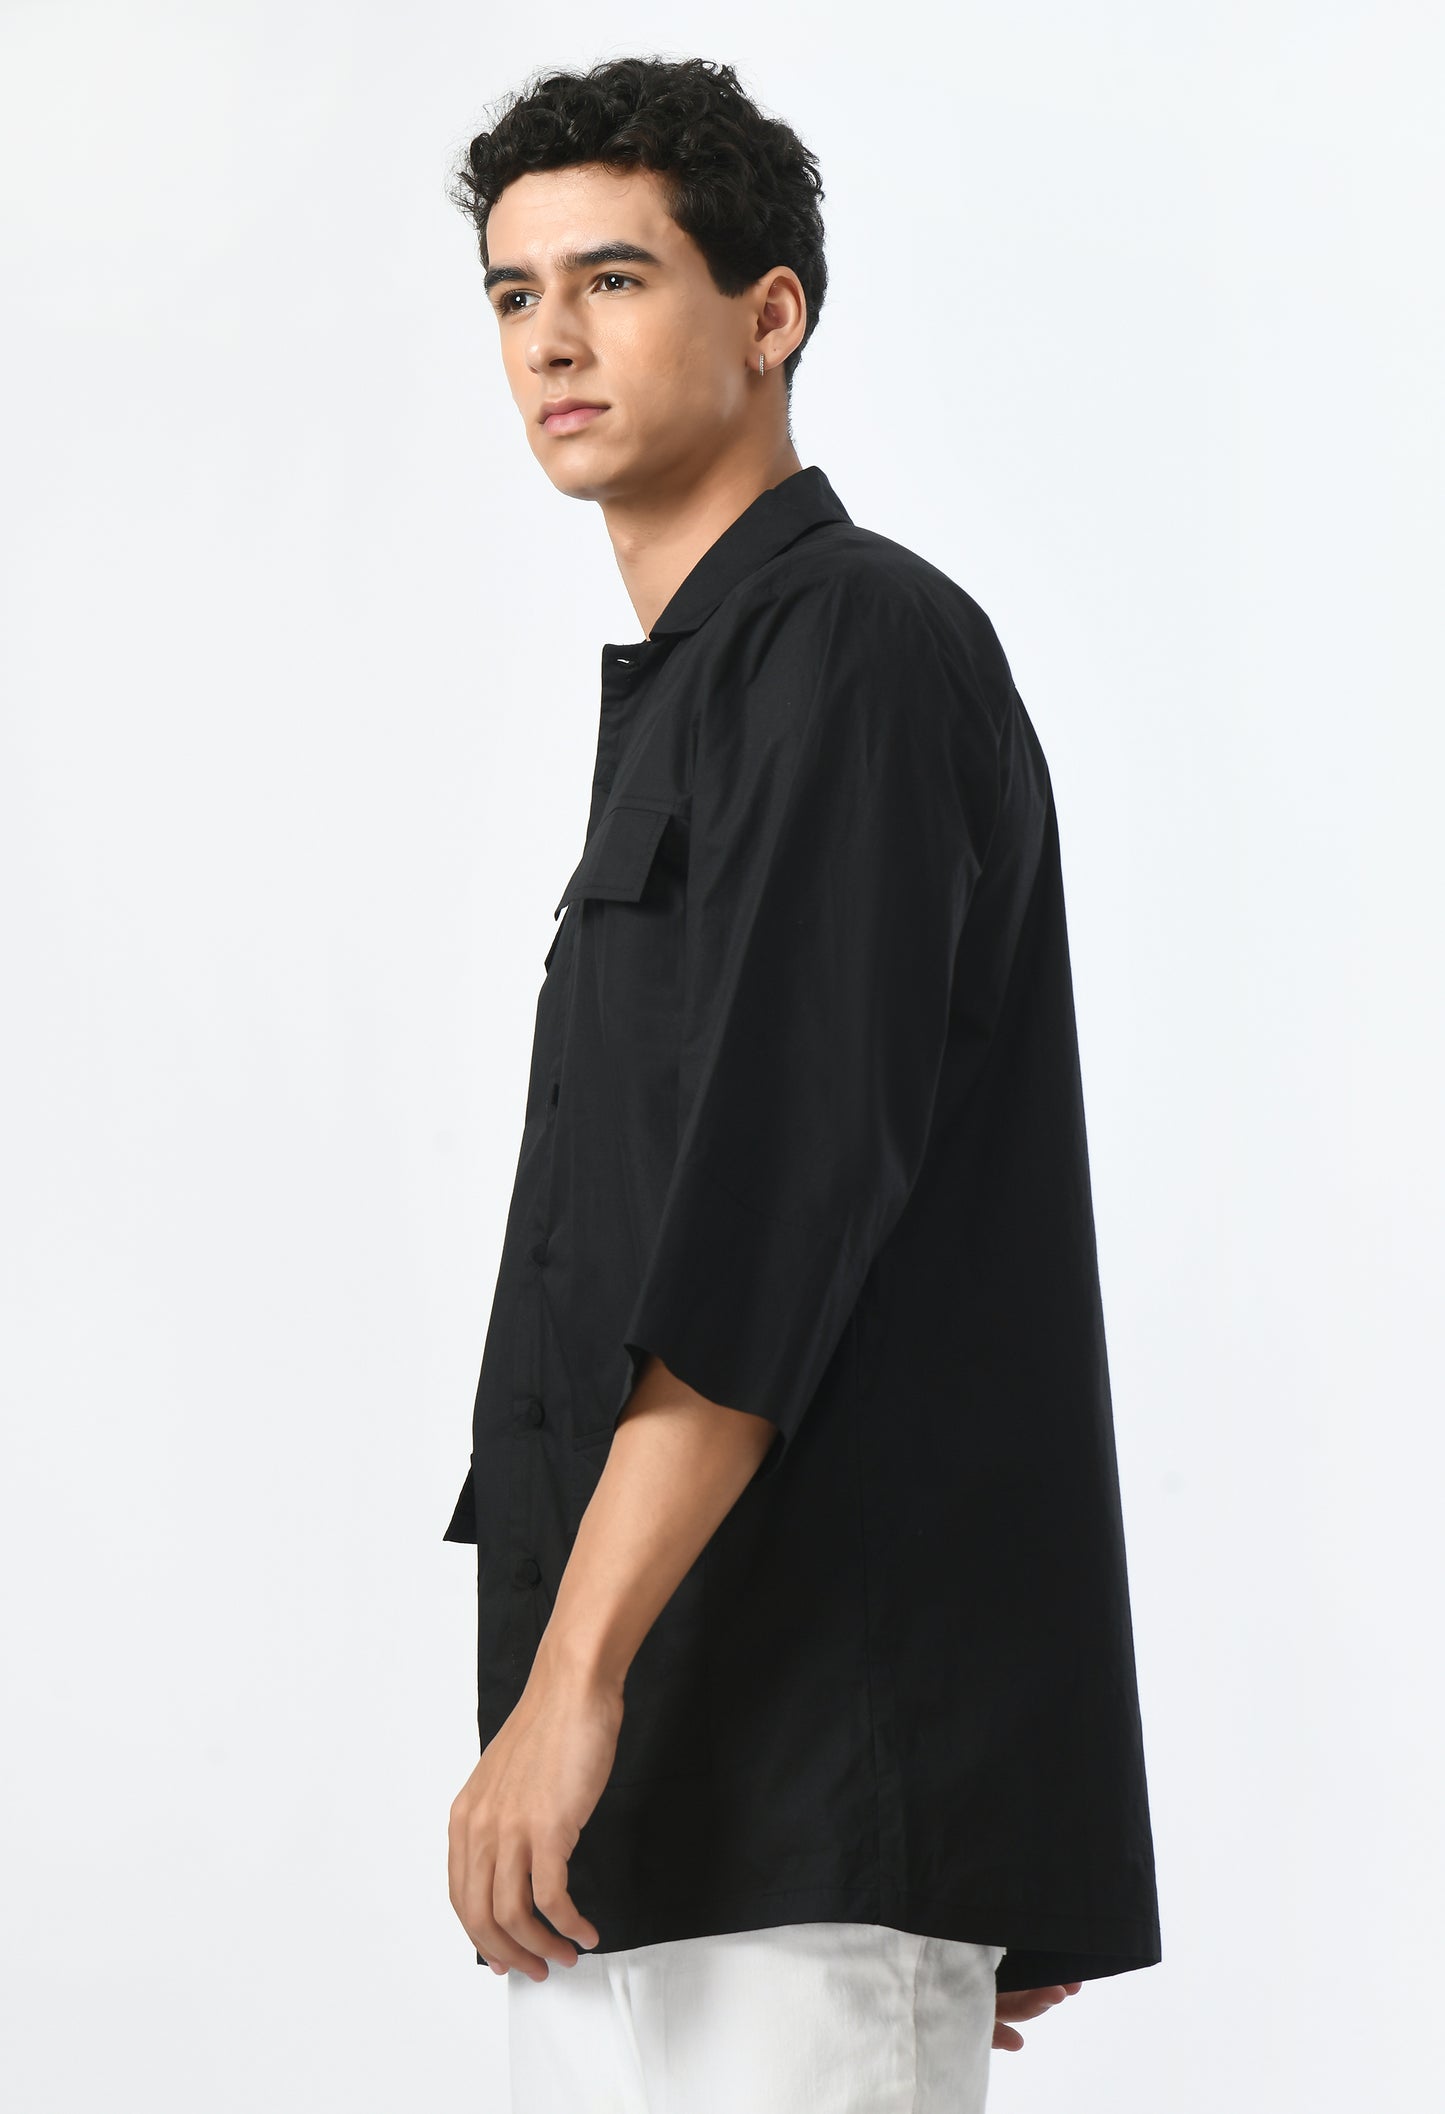 Unisex black regular-fit shirt.